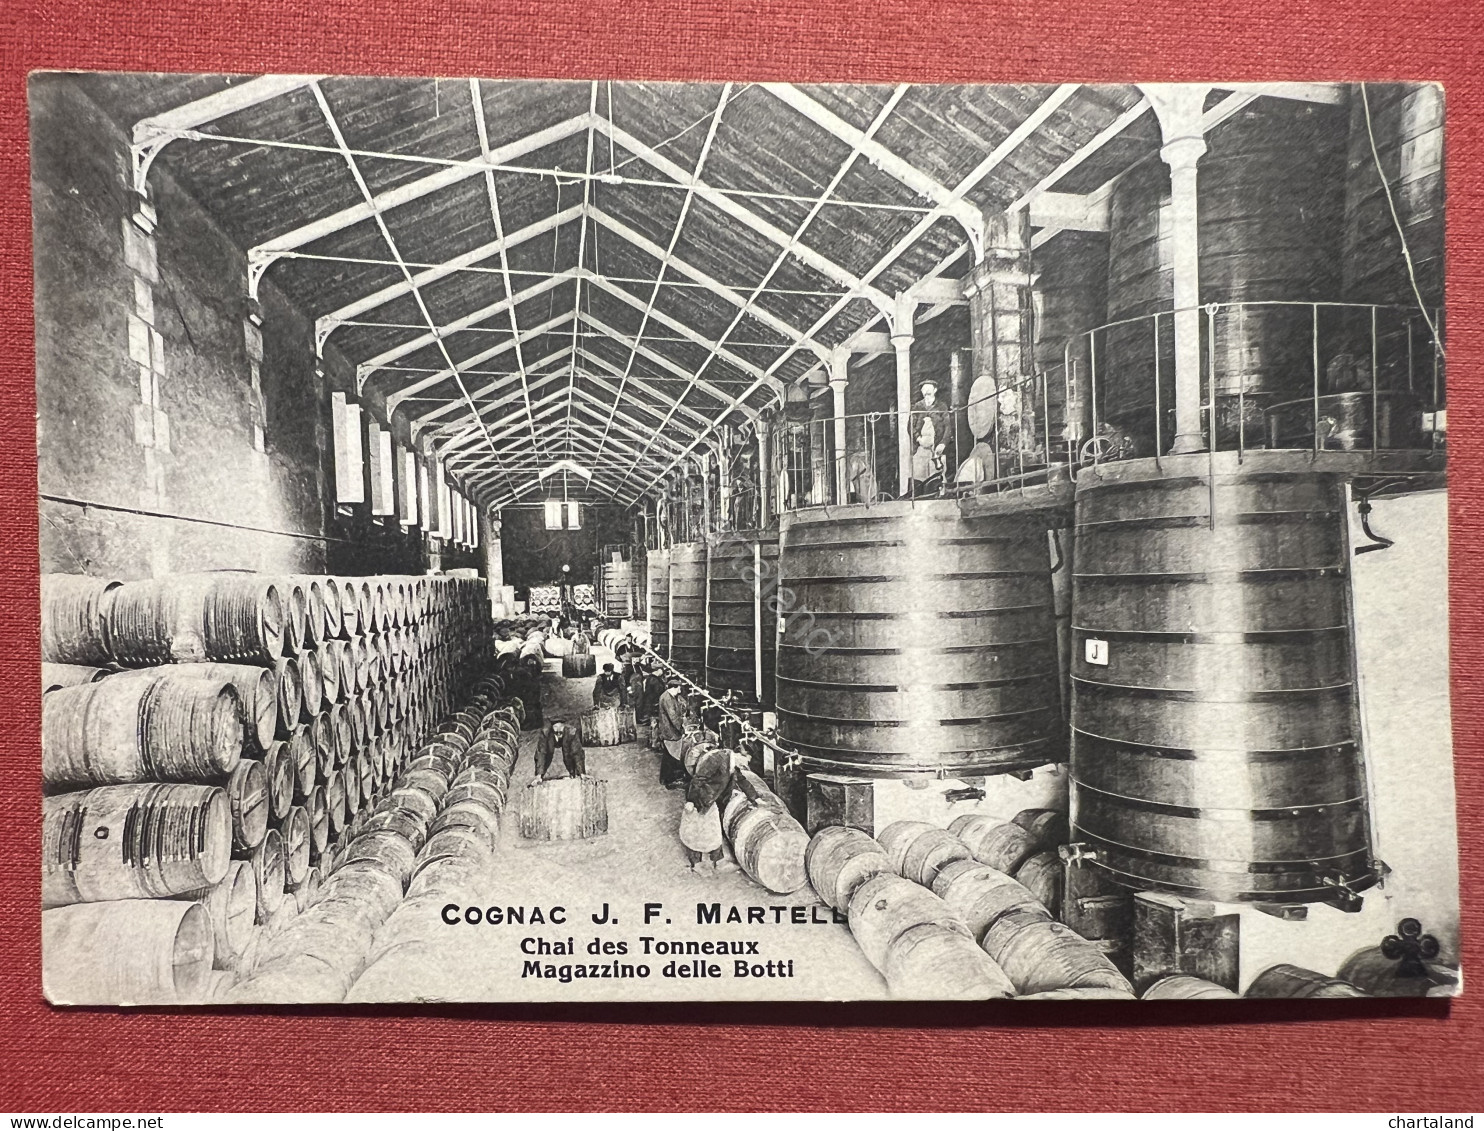 Cartolina Cognac J. F. Martell - Chant Des Tonneaux - Magazzino Delle Botti 1920 - Publicidad